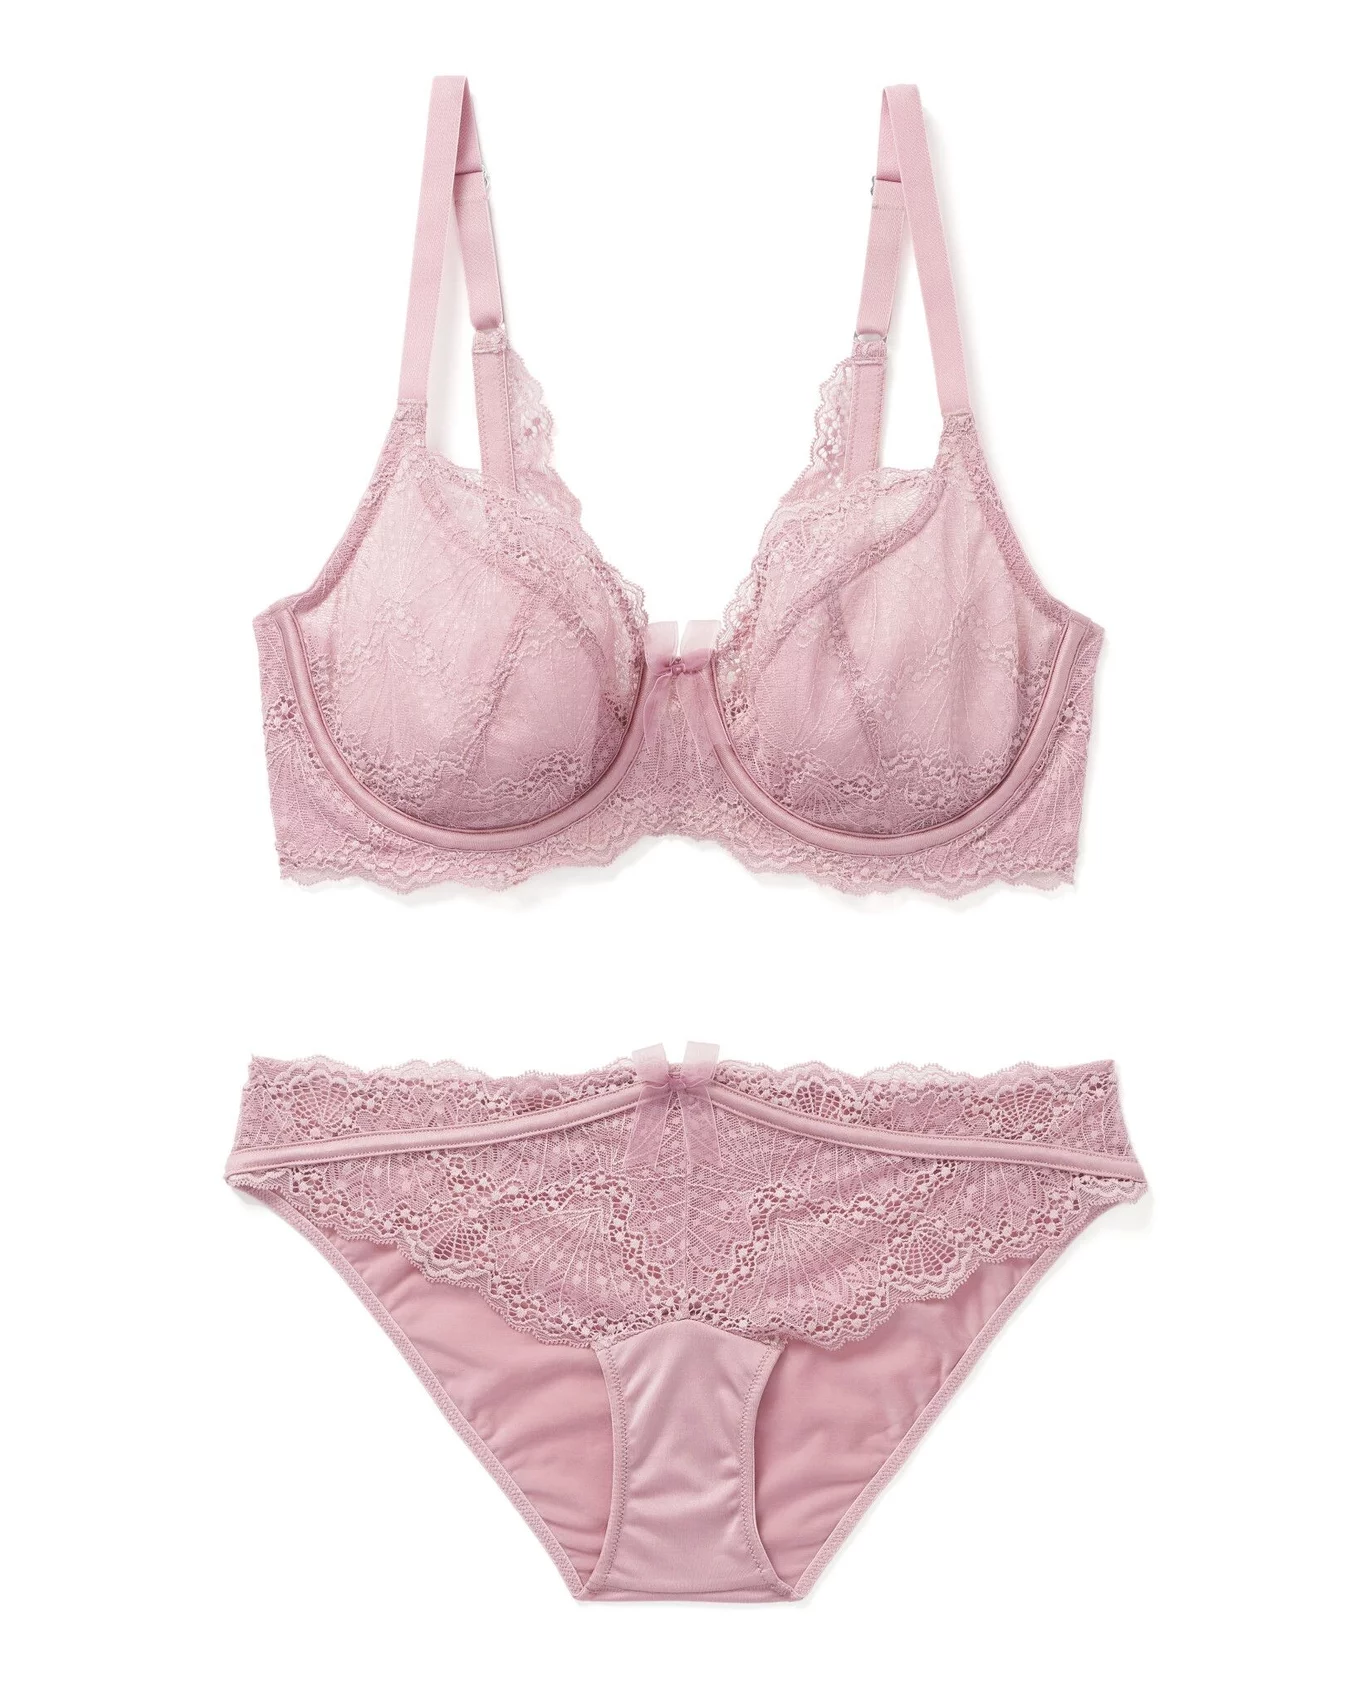 Adore Me Pink Purple Lace Brief Underwear Size Large - beyond exchange